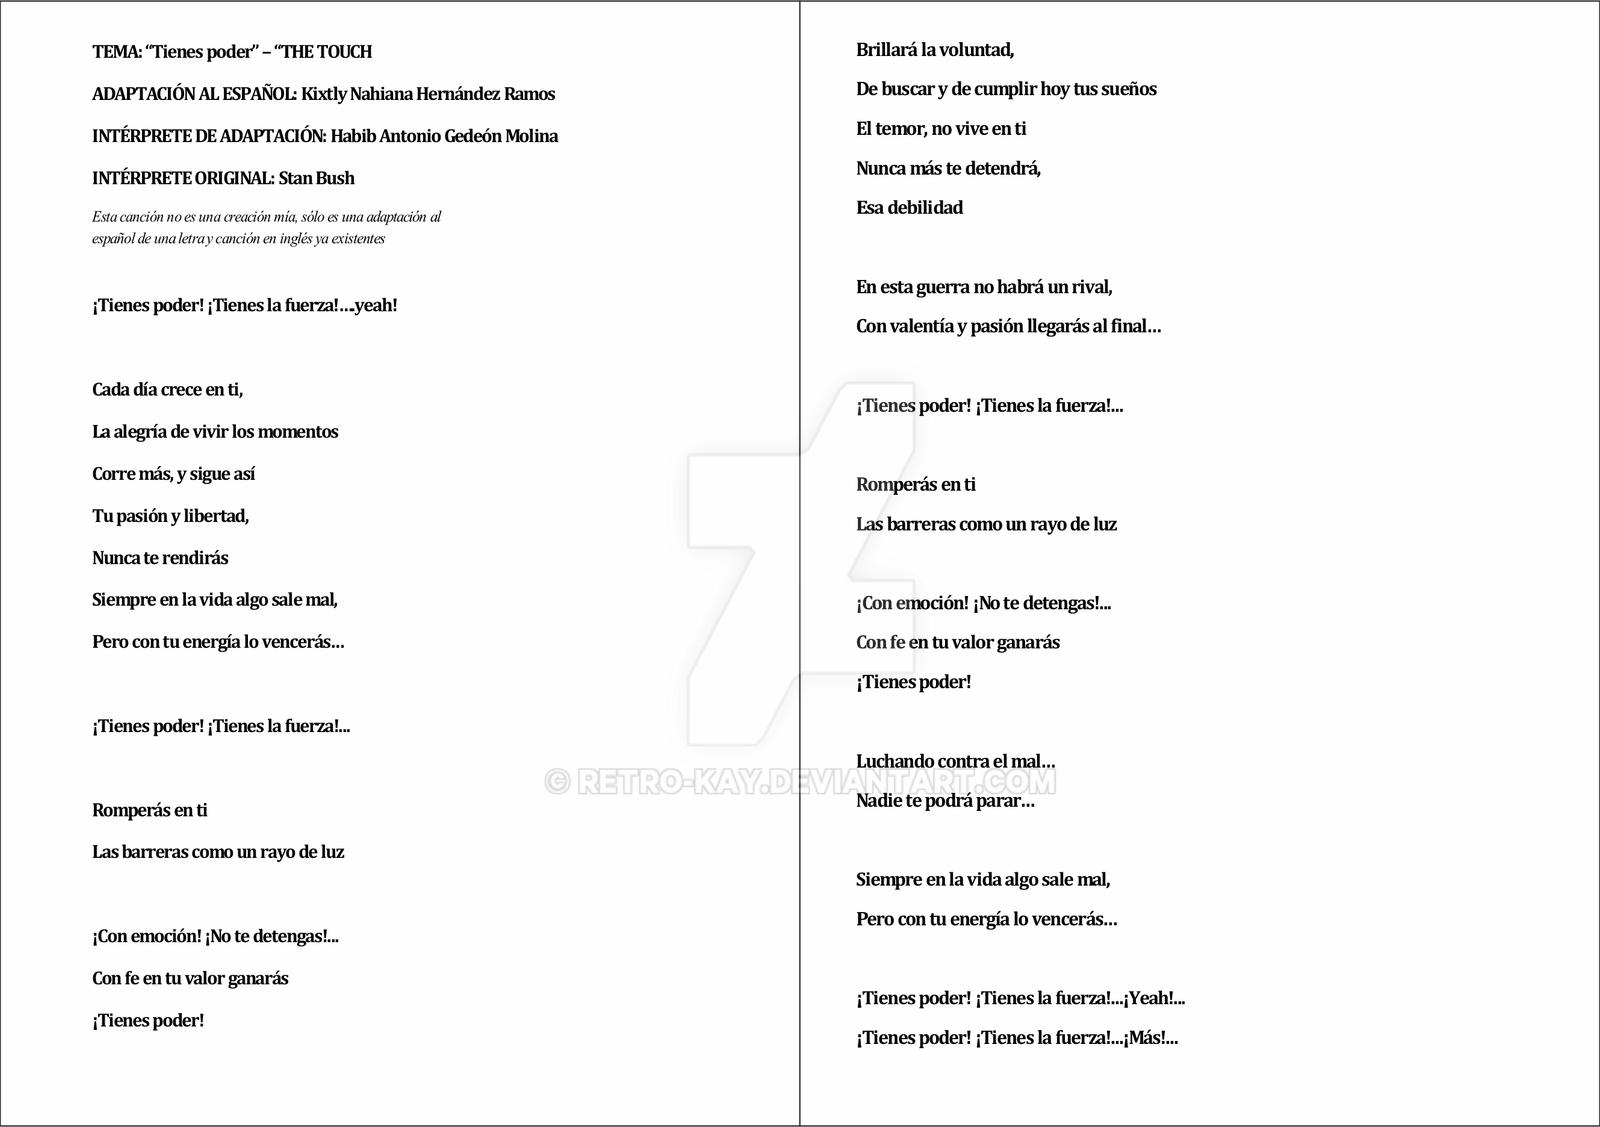 The touch - Lyrics (Adaptation Spanish)